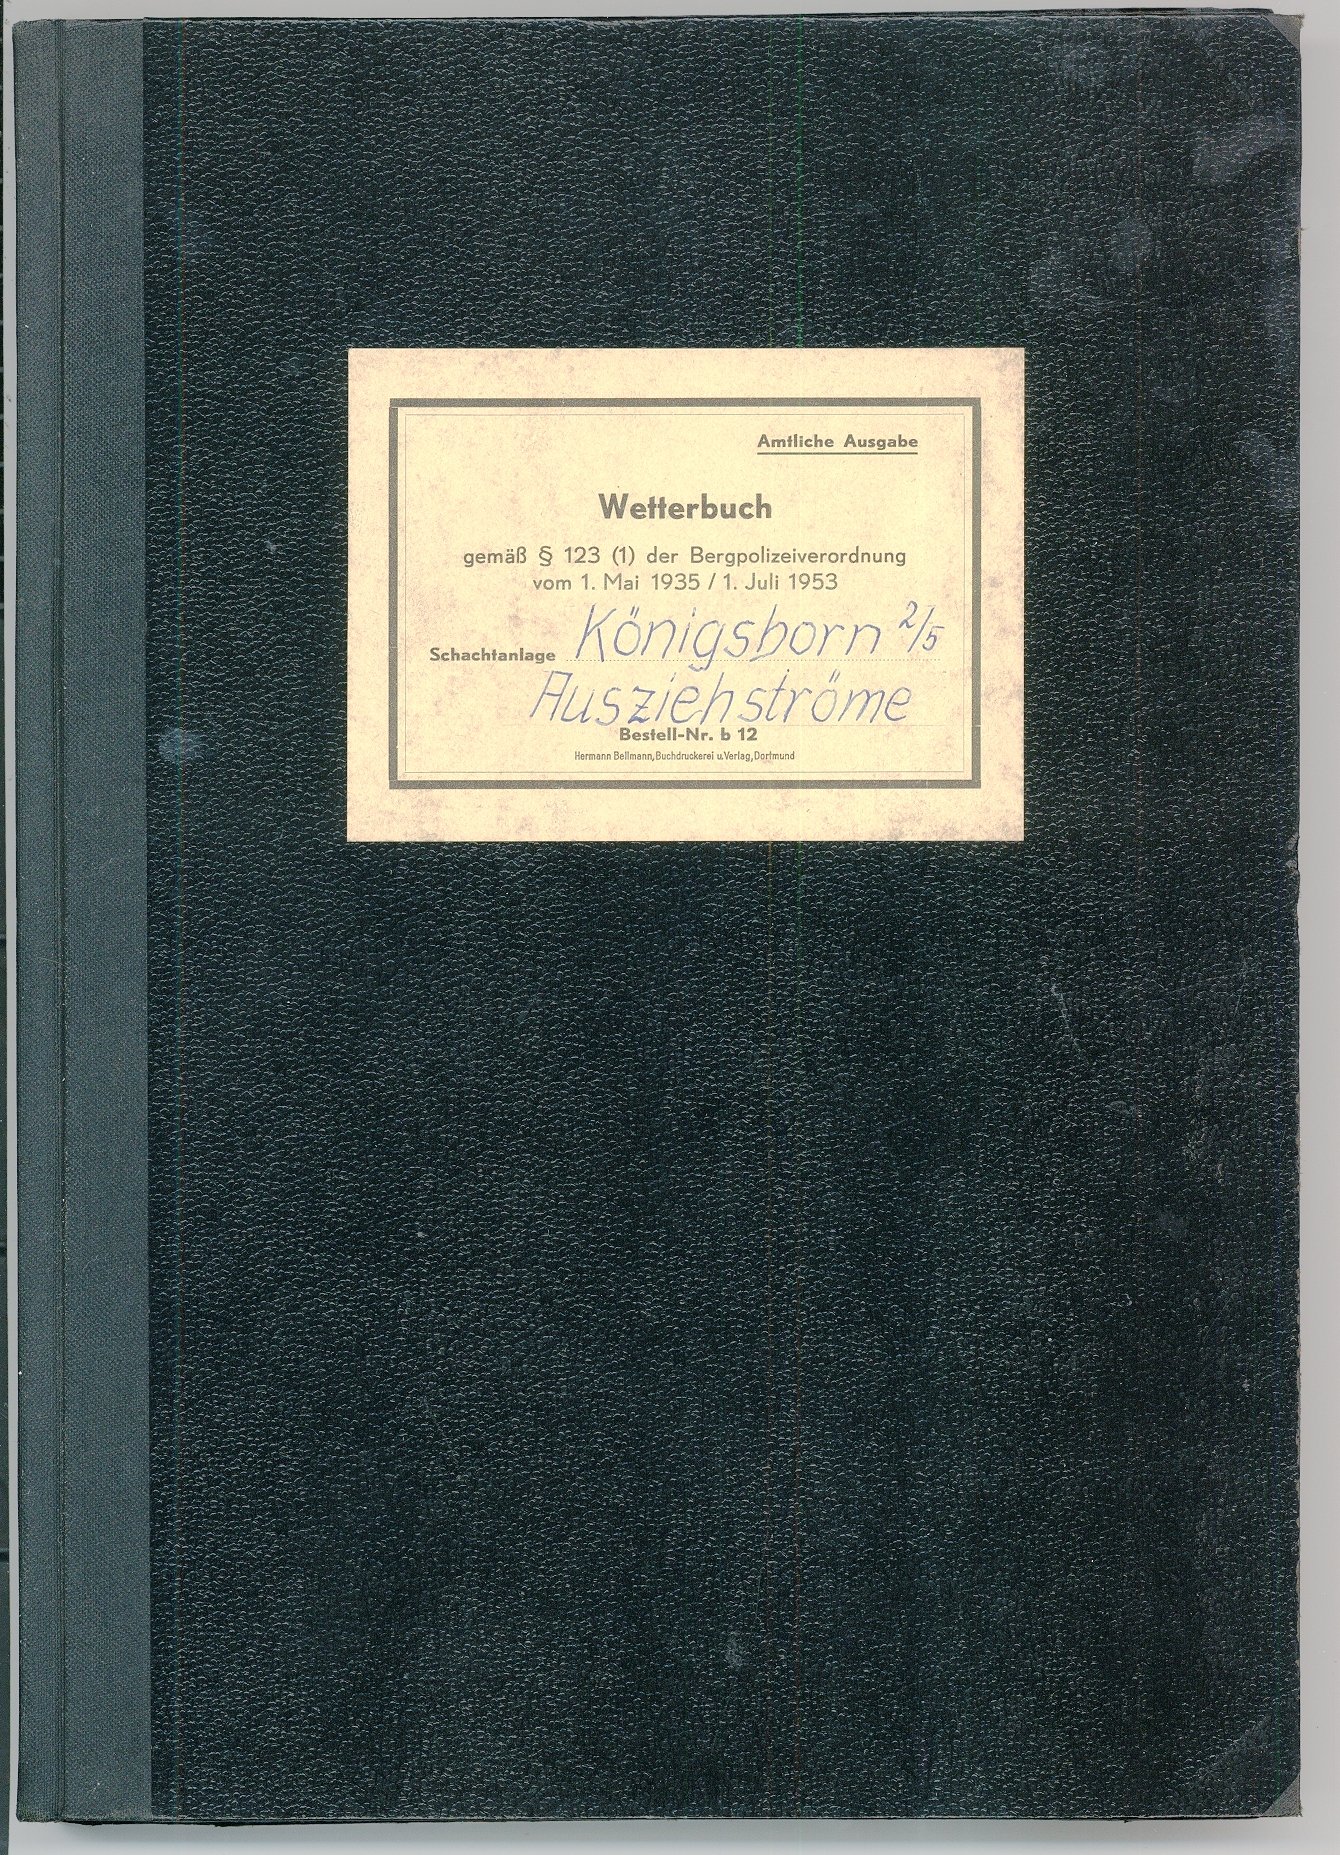 Wetterbuch (Hellweg-Museum Unna CC BY-NC-SA)